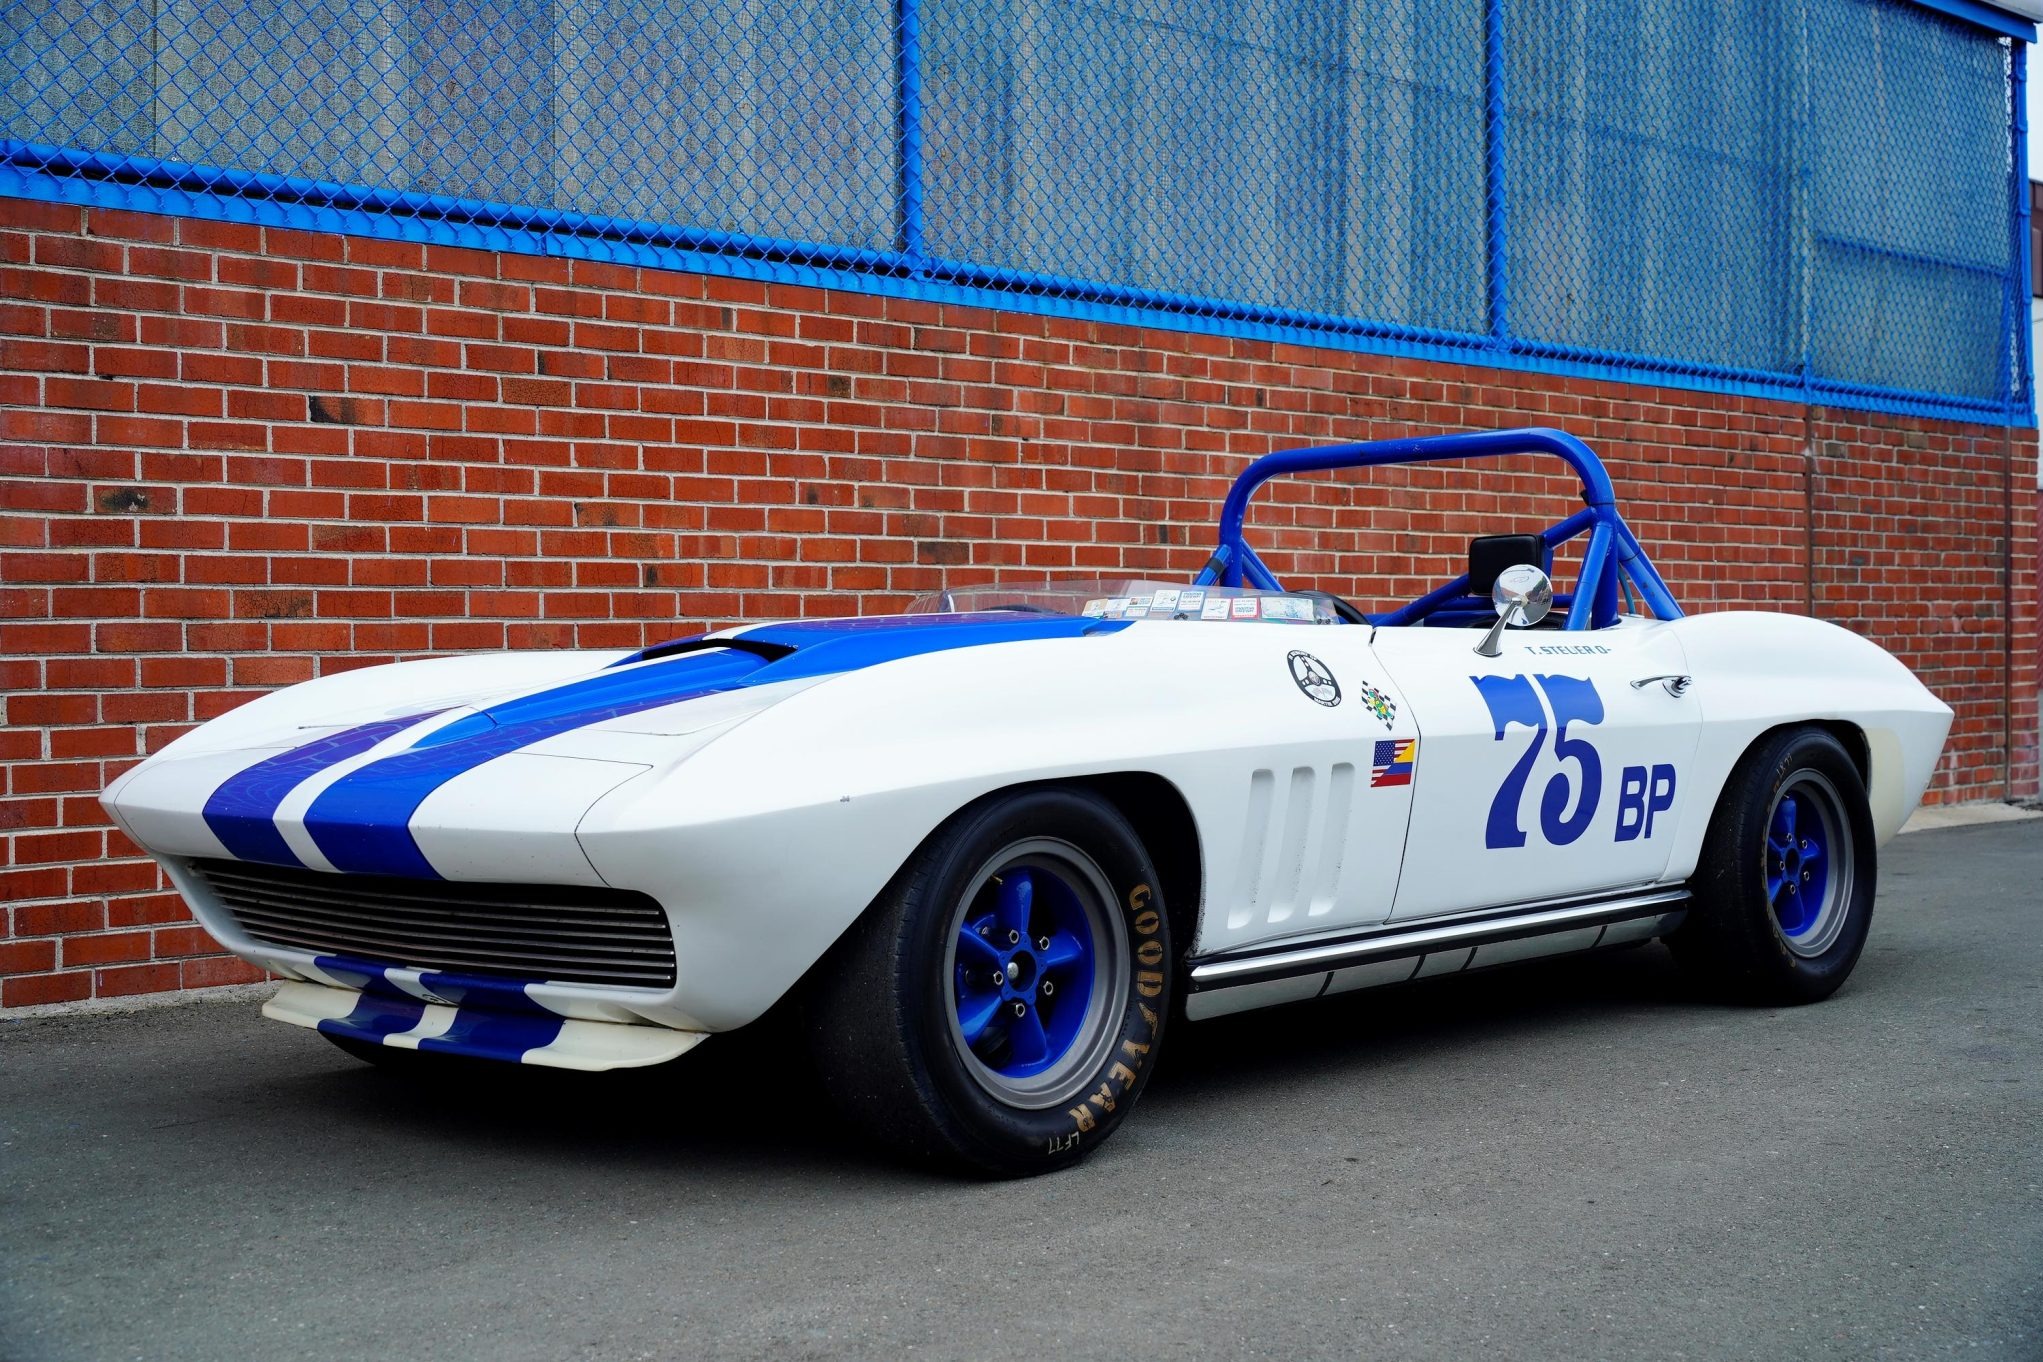 Used 1965 Chevrolet Corvette Convertible Race Car Review